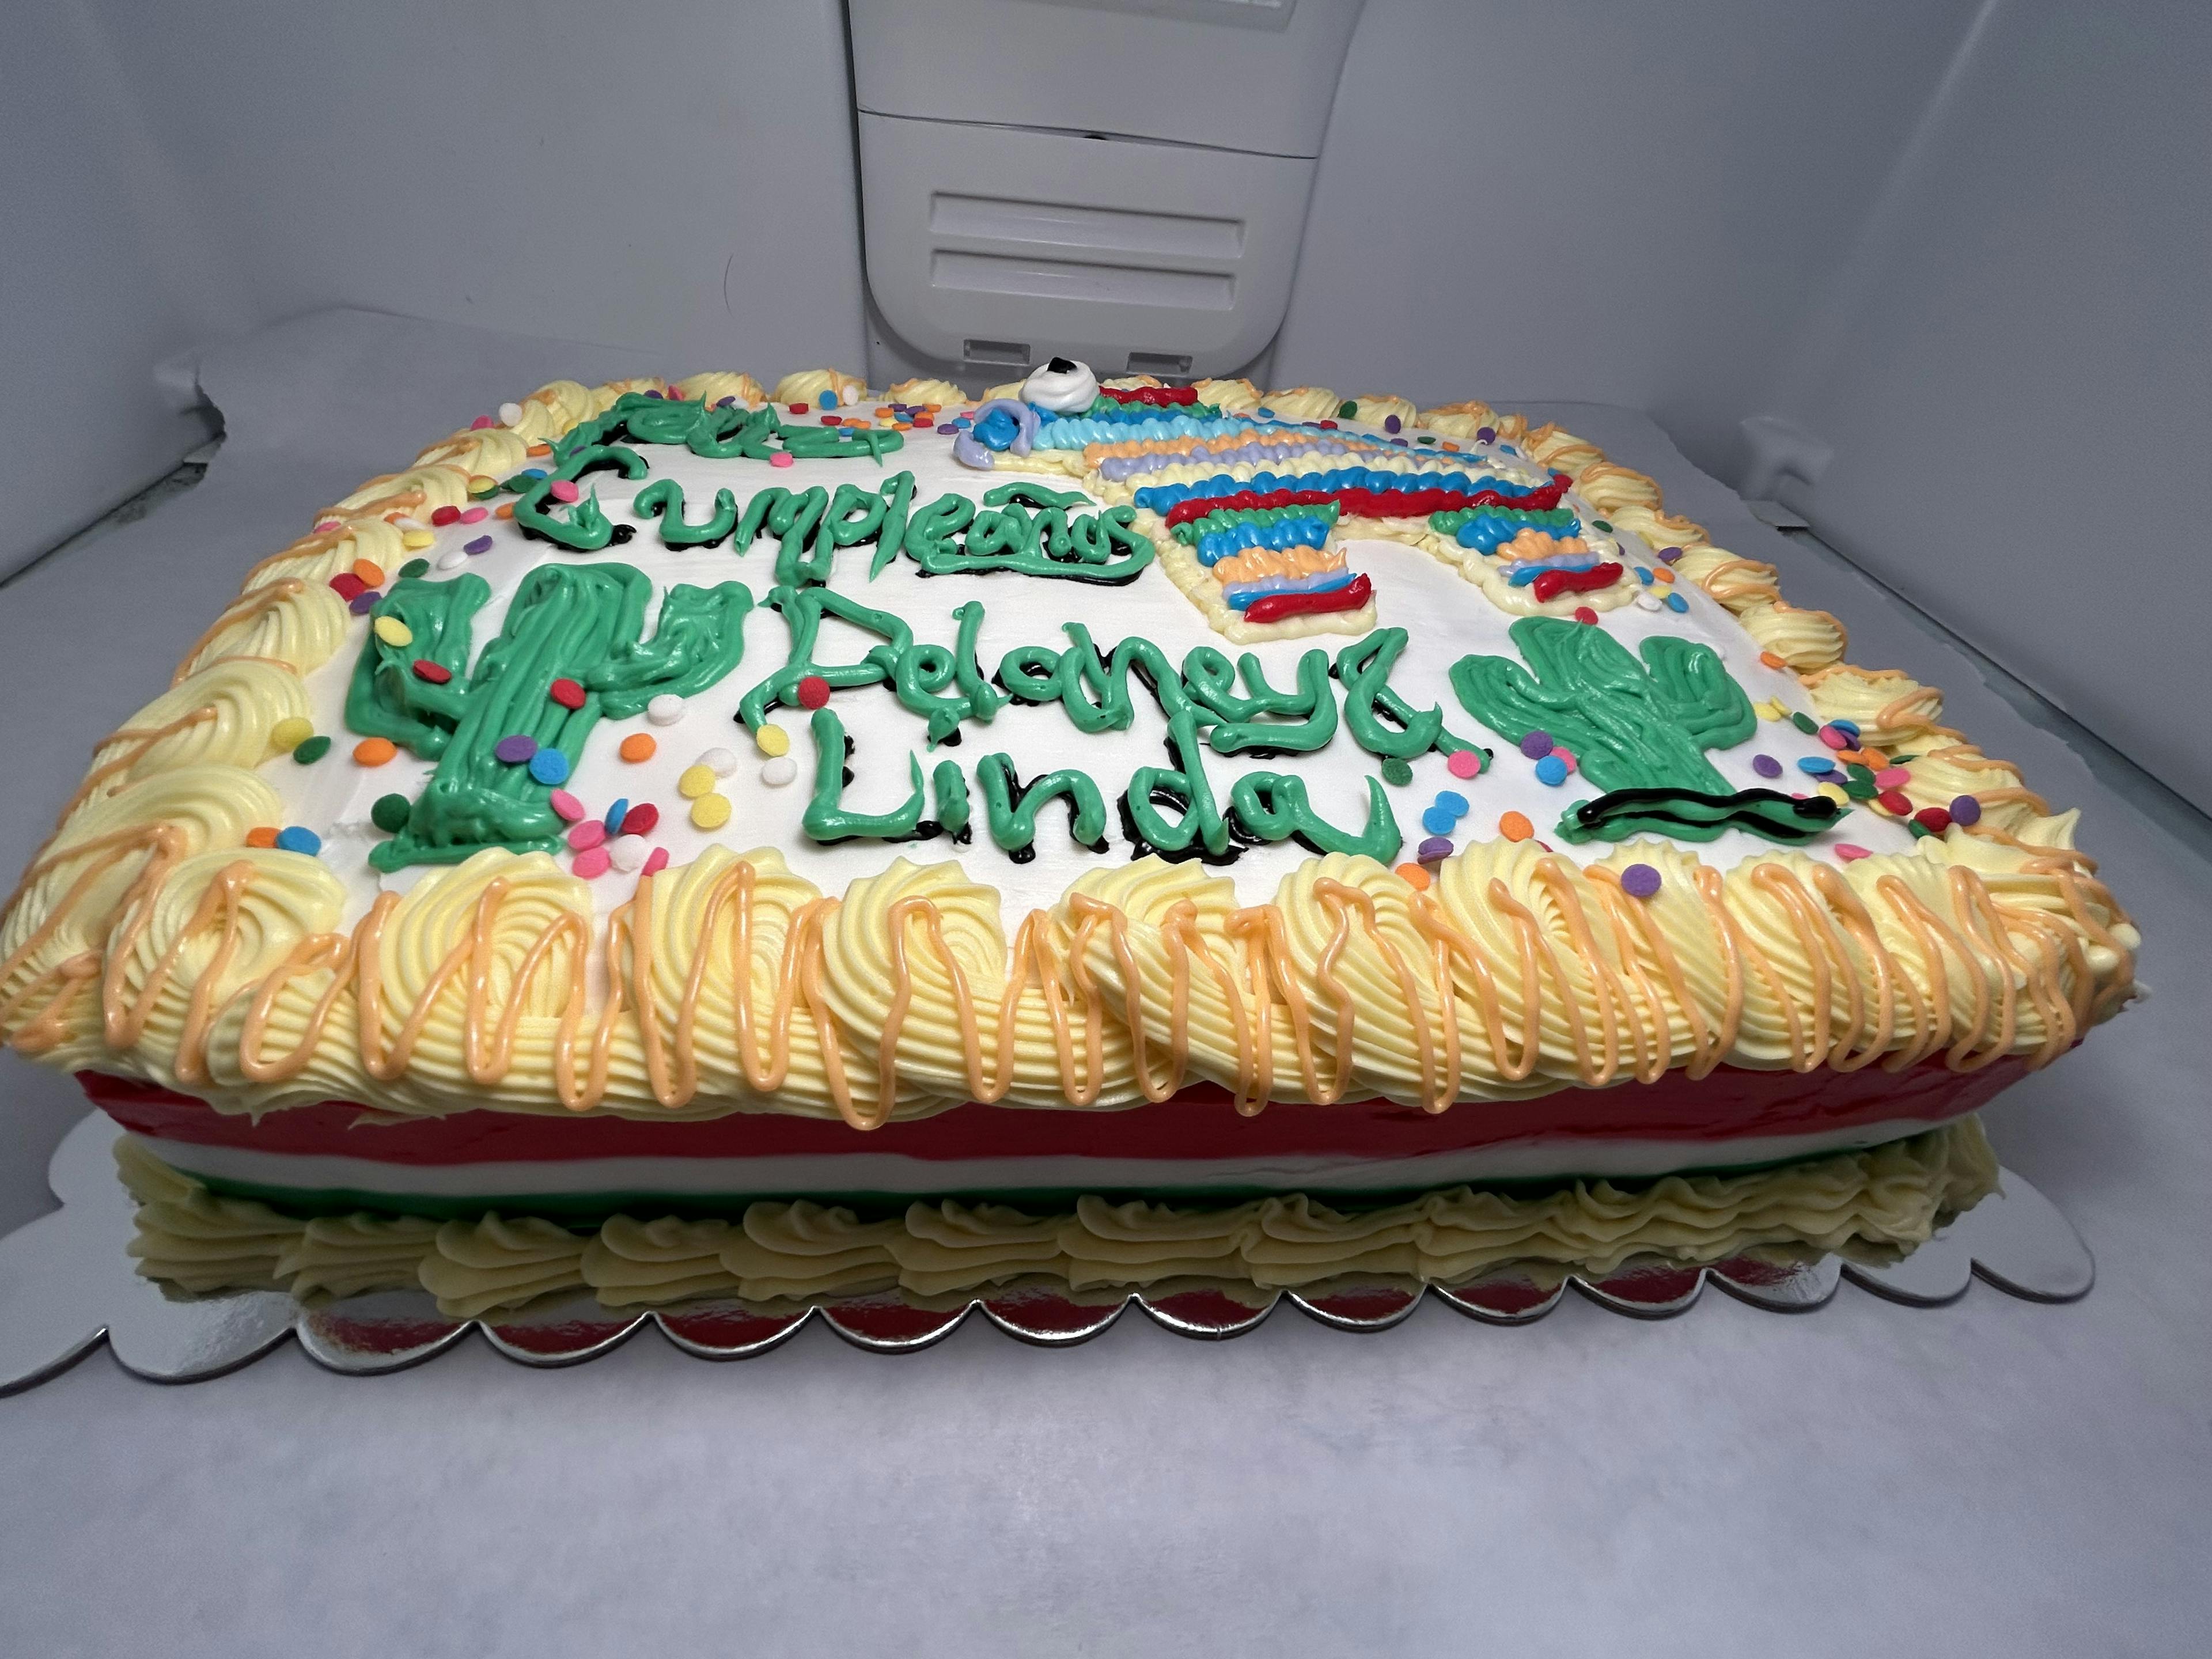 Traditional happy birthday cake